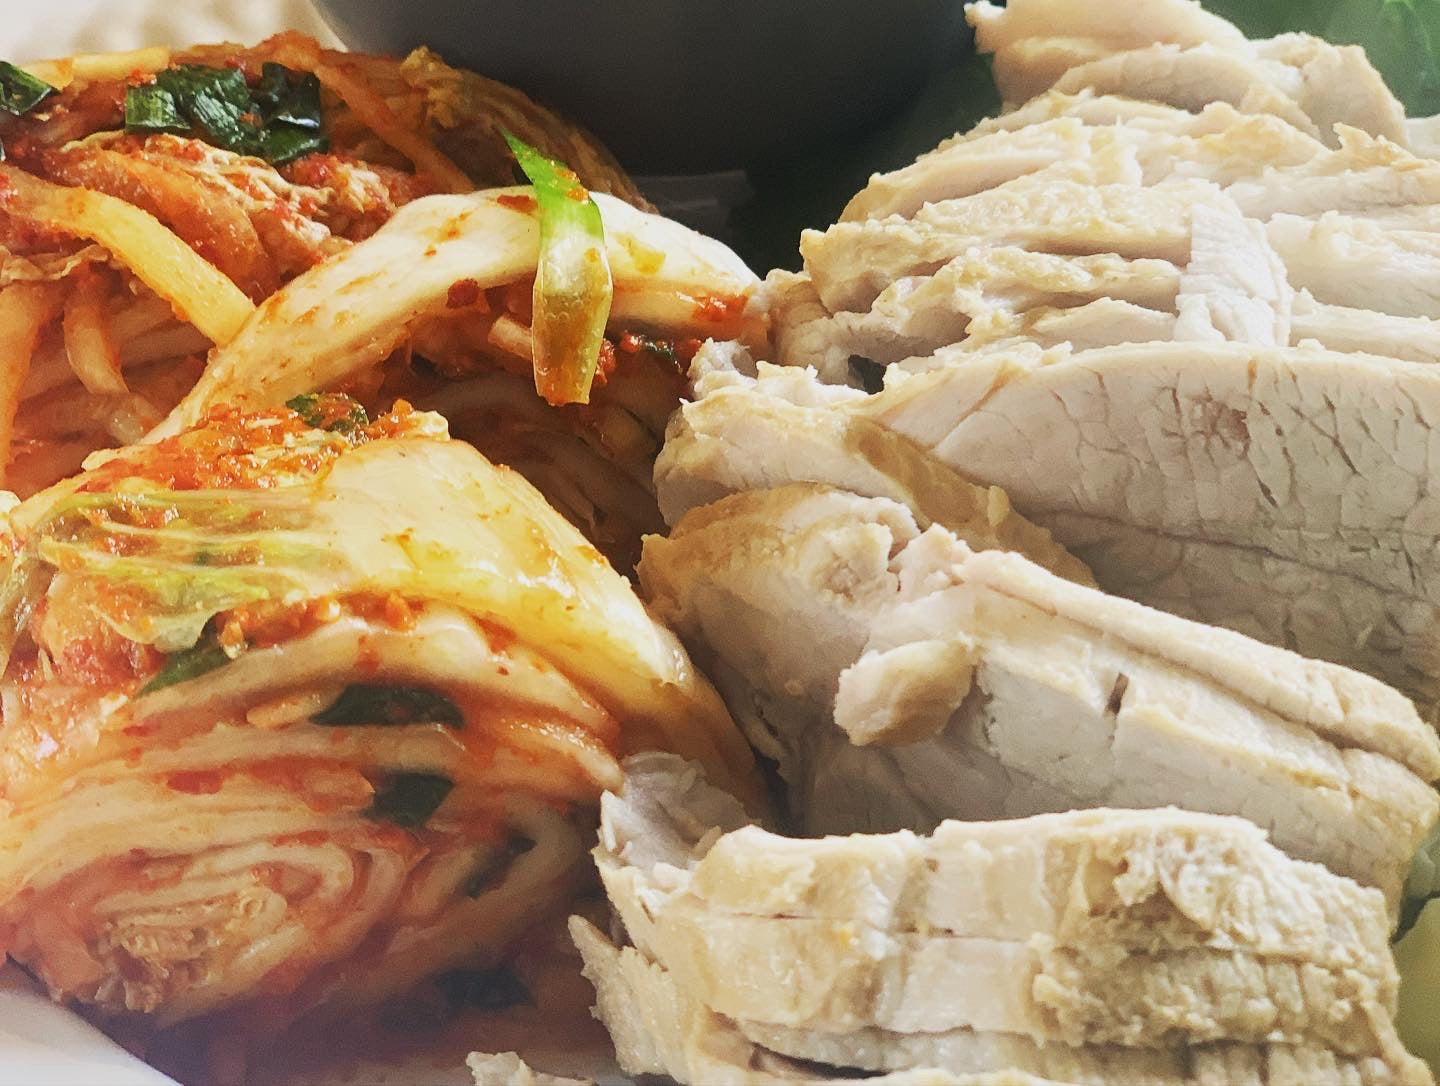 Kimchi classic